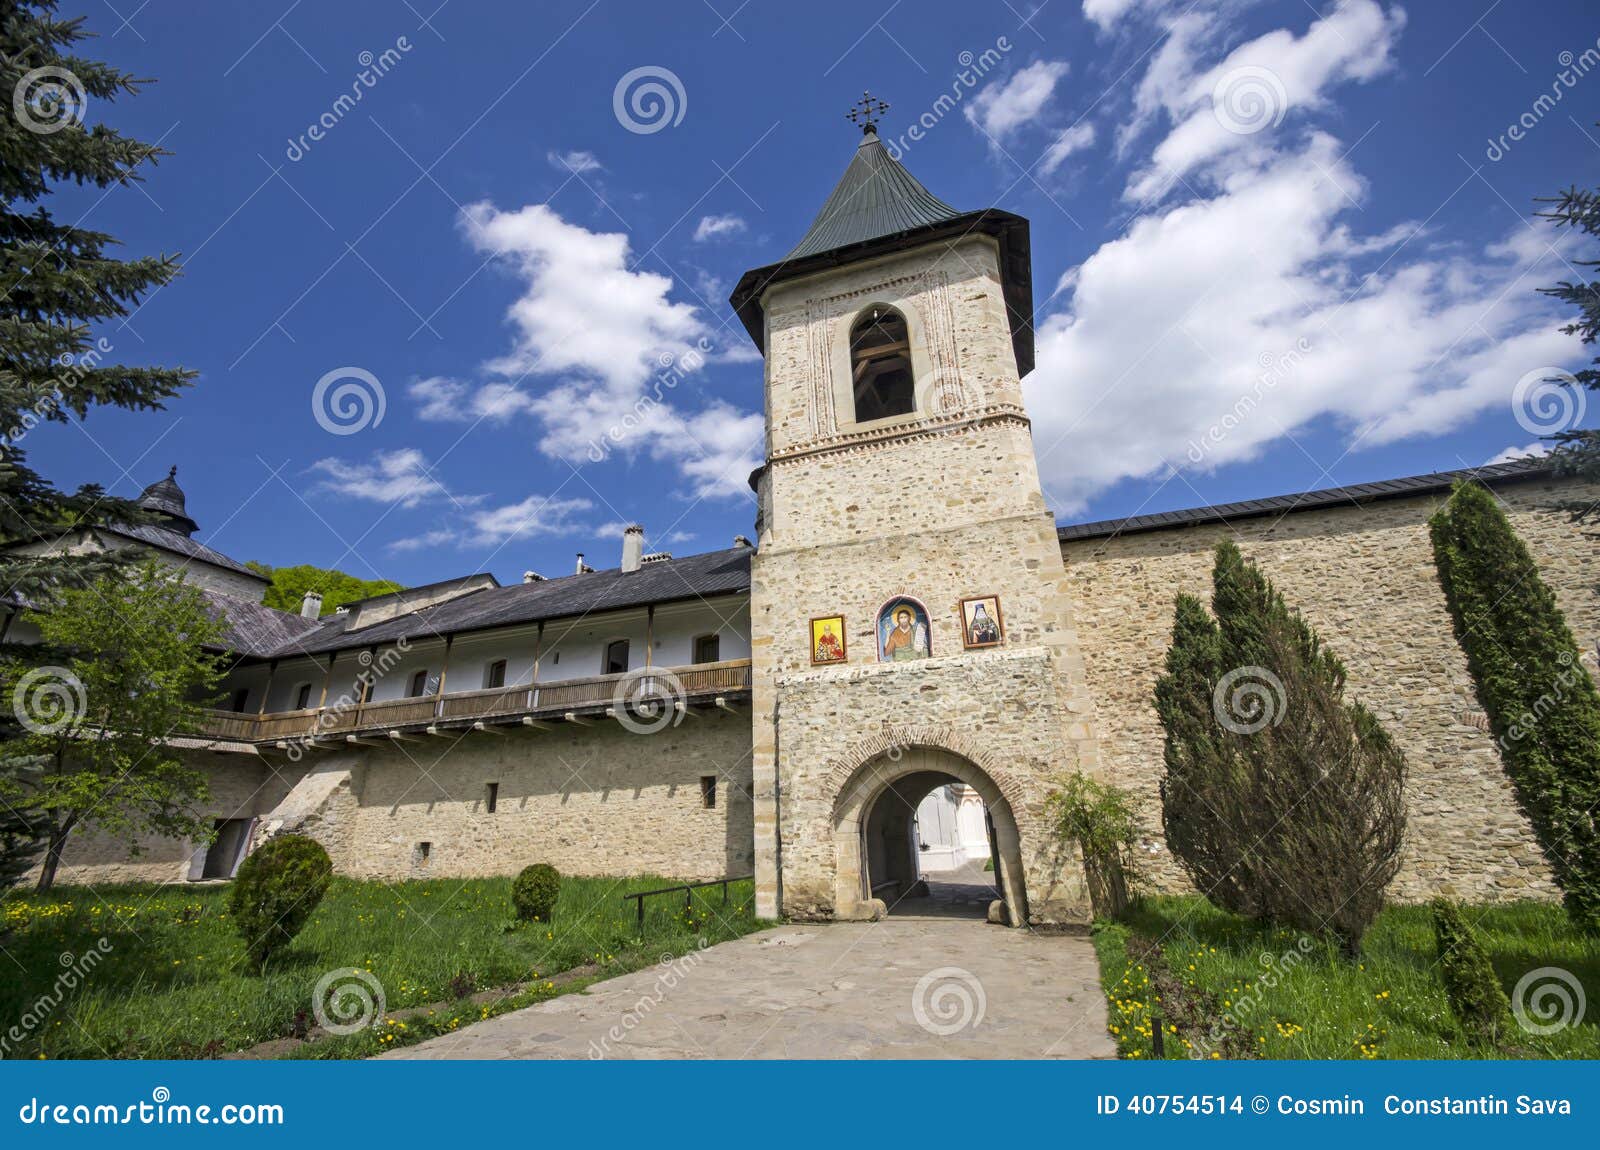 secu monastery surrounding walls